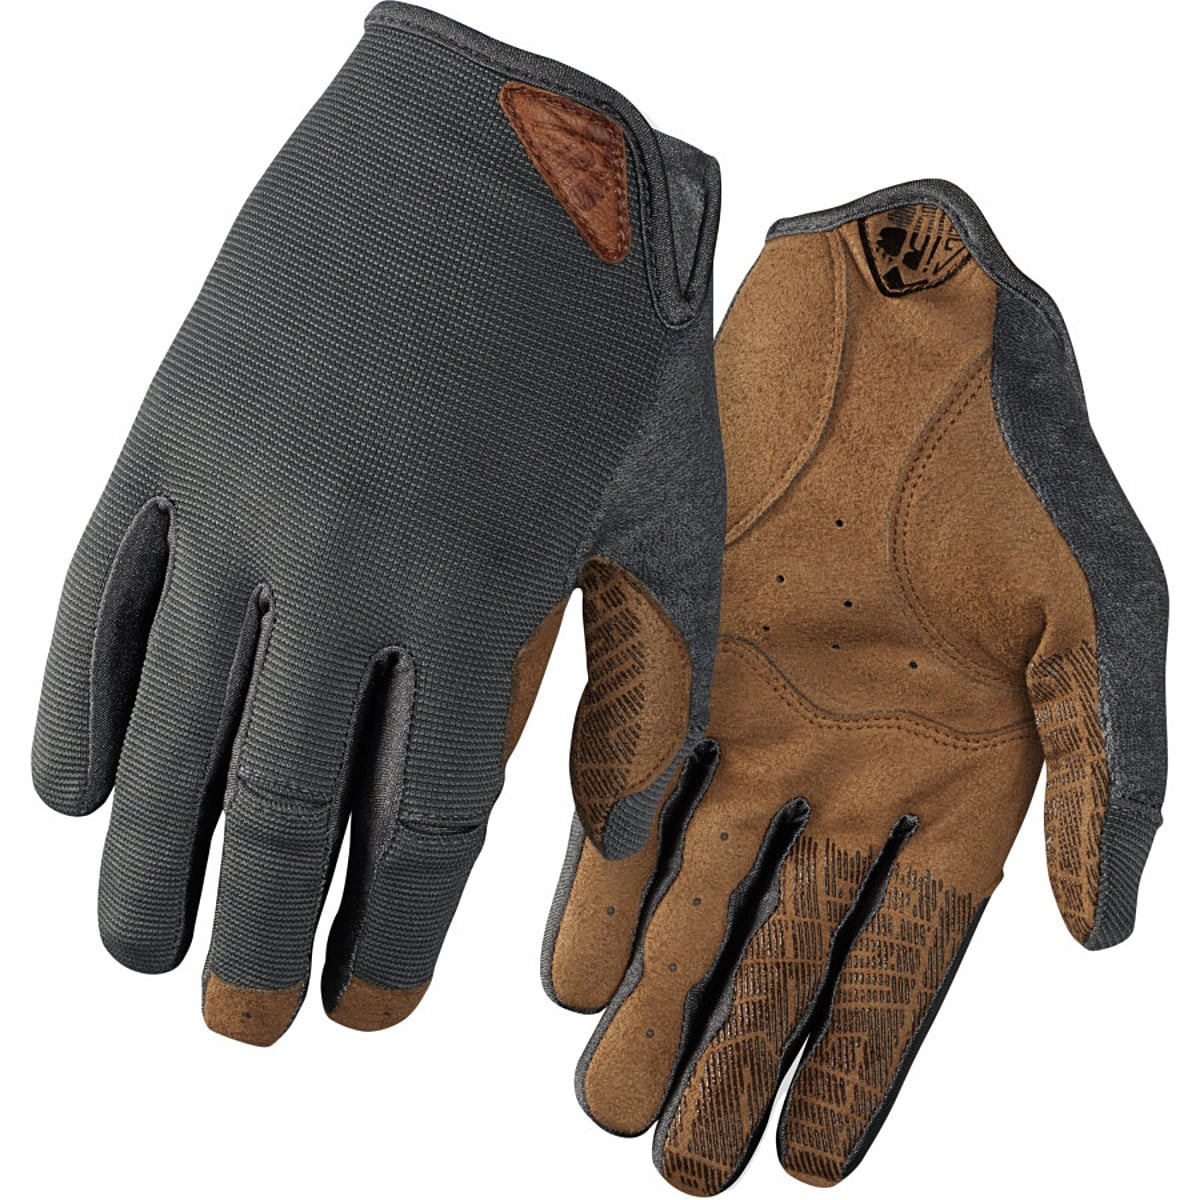 DND Glove - Men's